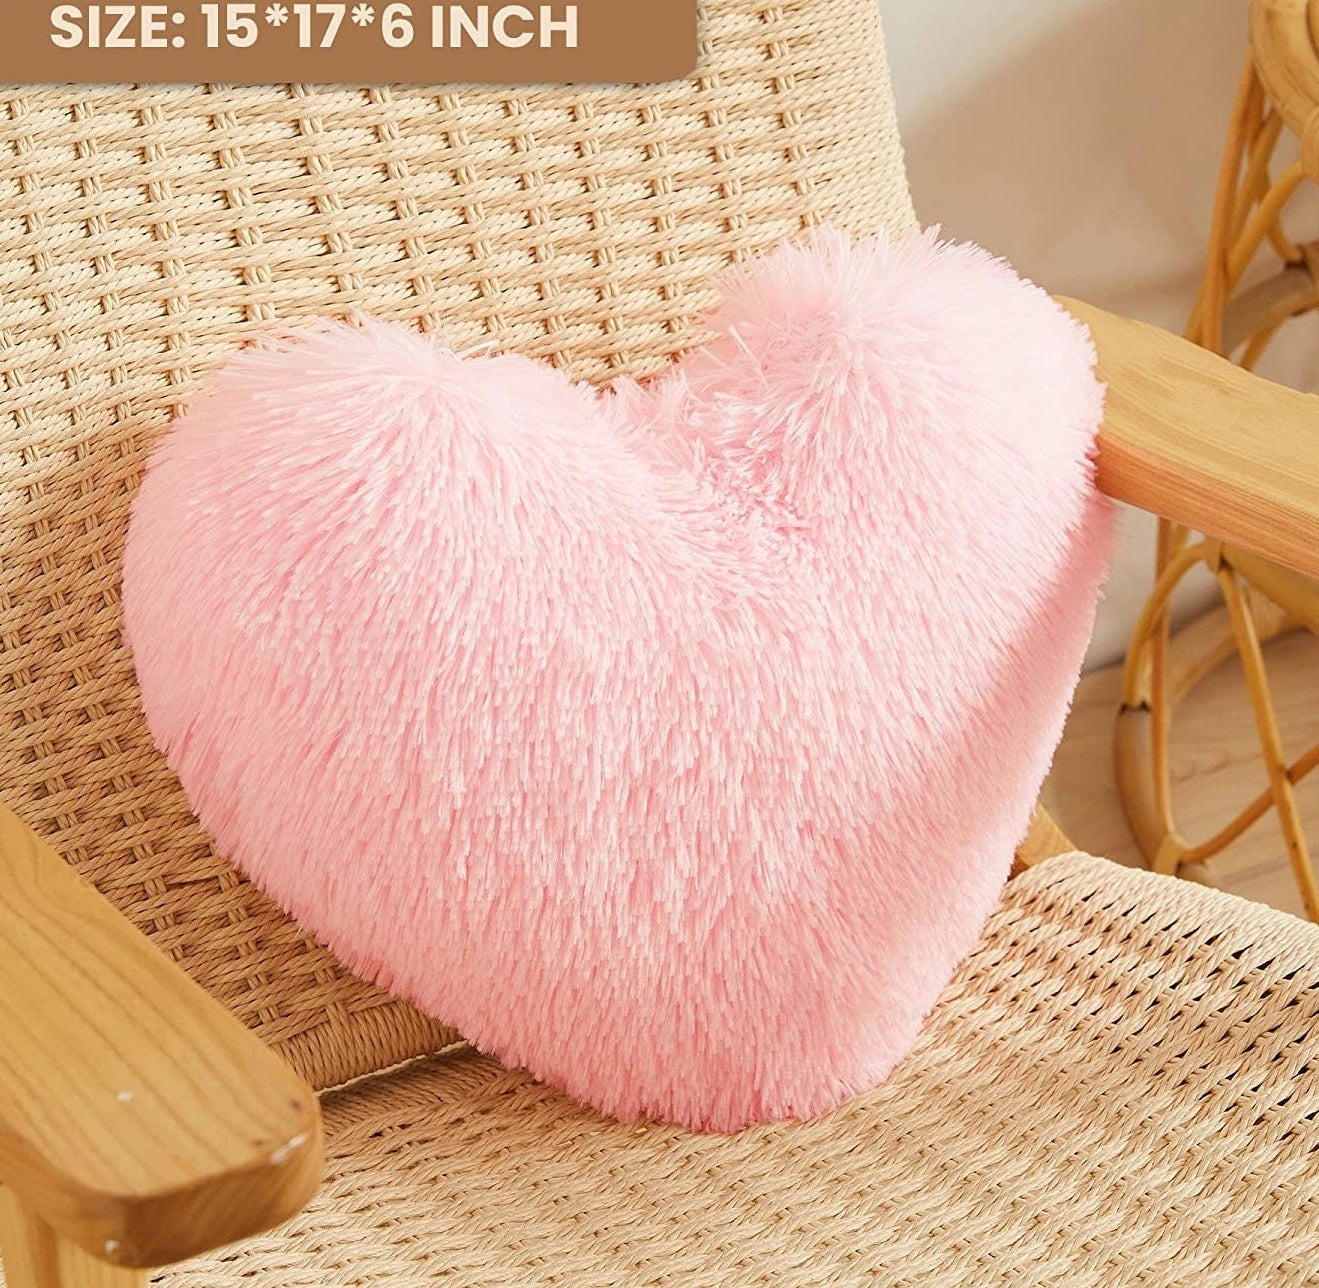 a fluffy heart-shaped pillow on a rattan chair